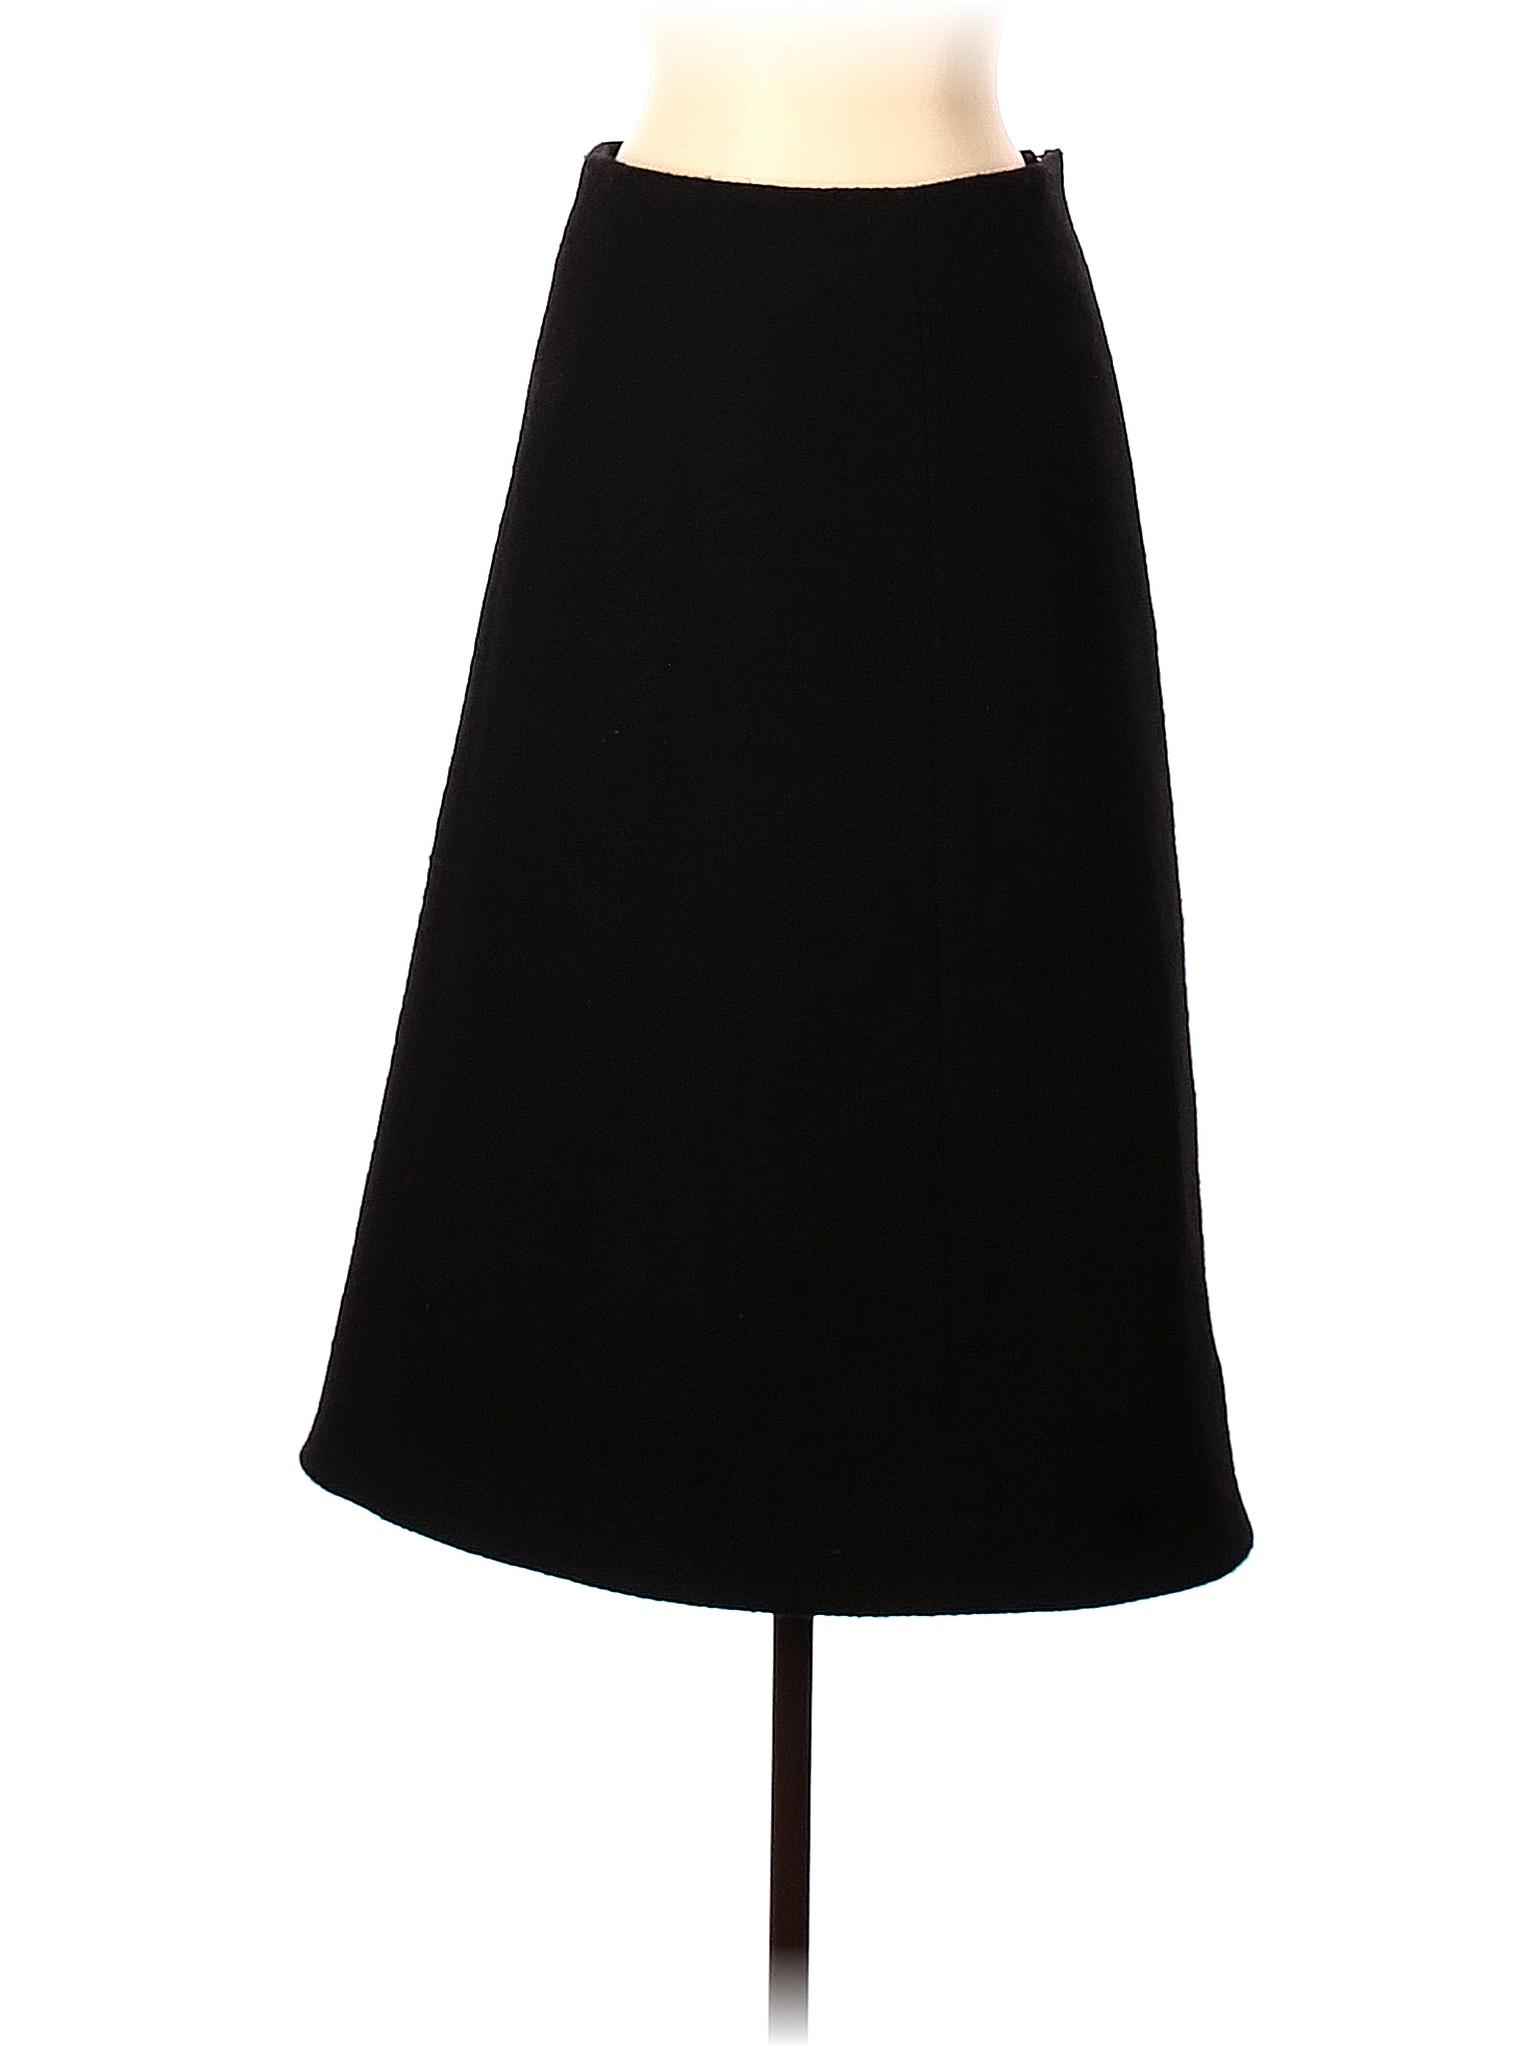 Louis Vuitton Women's Skirts for sale